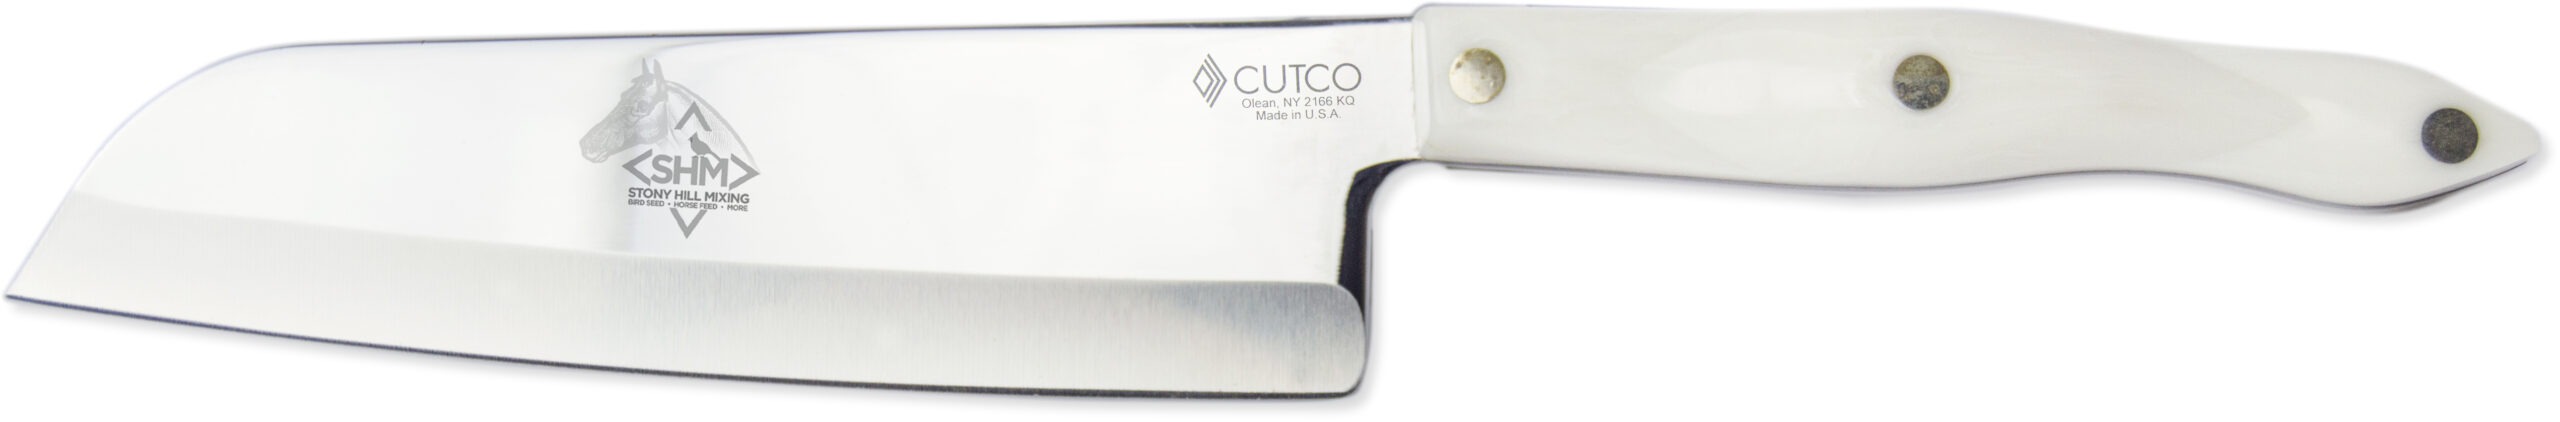 Cutco Knives – CUTTING EDGE GIFTS